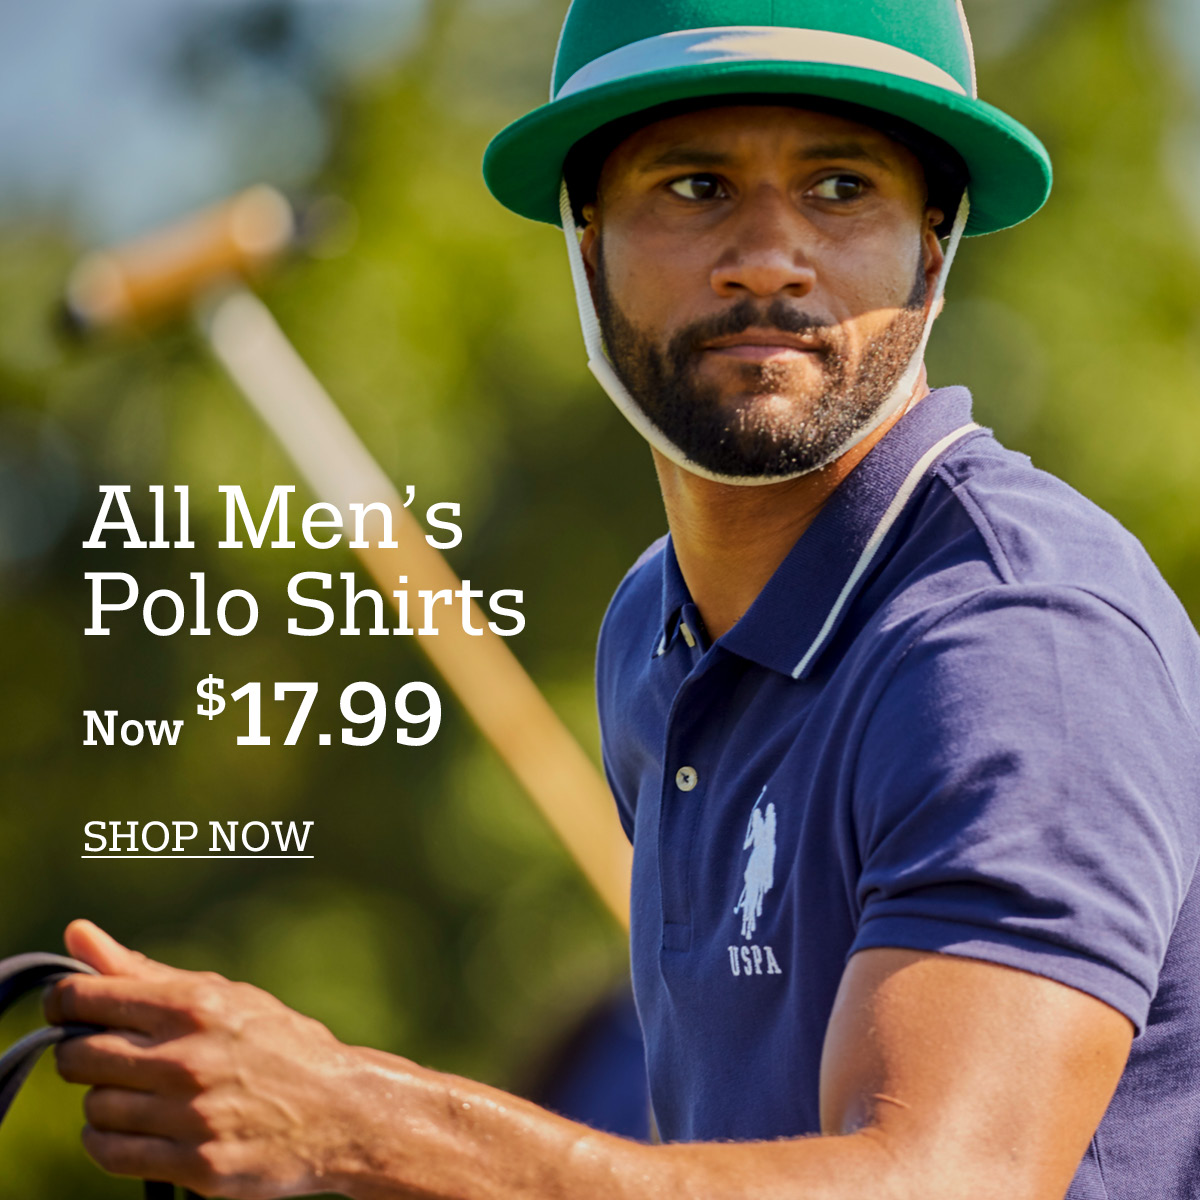 All Men's Polo Shirts $17.99